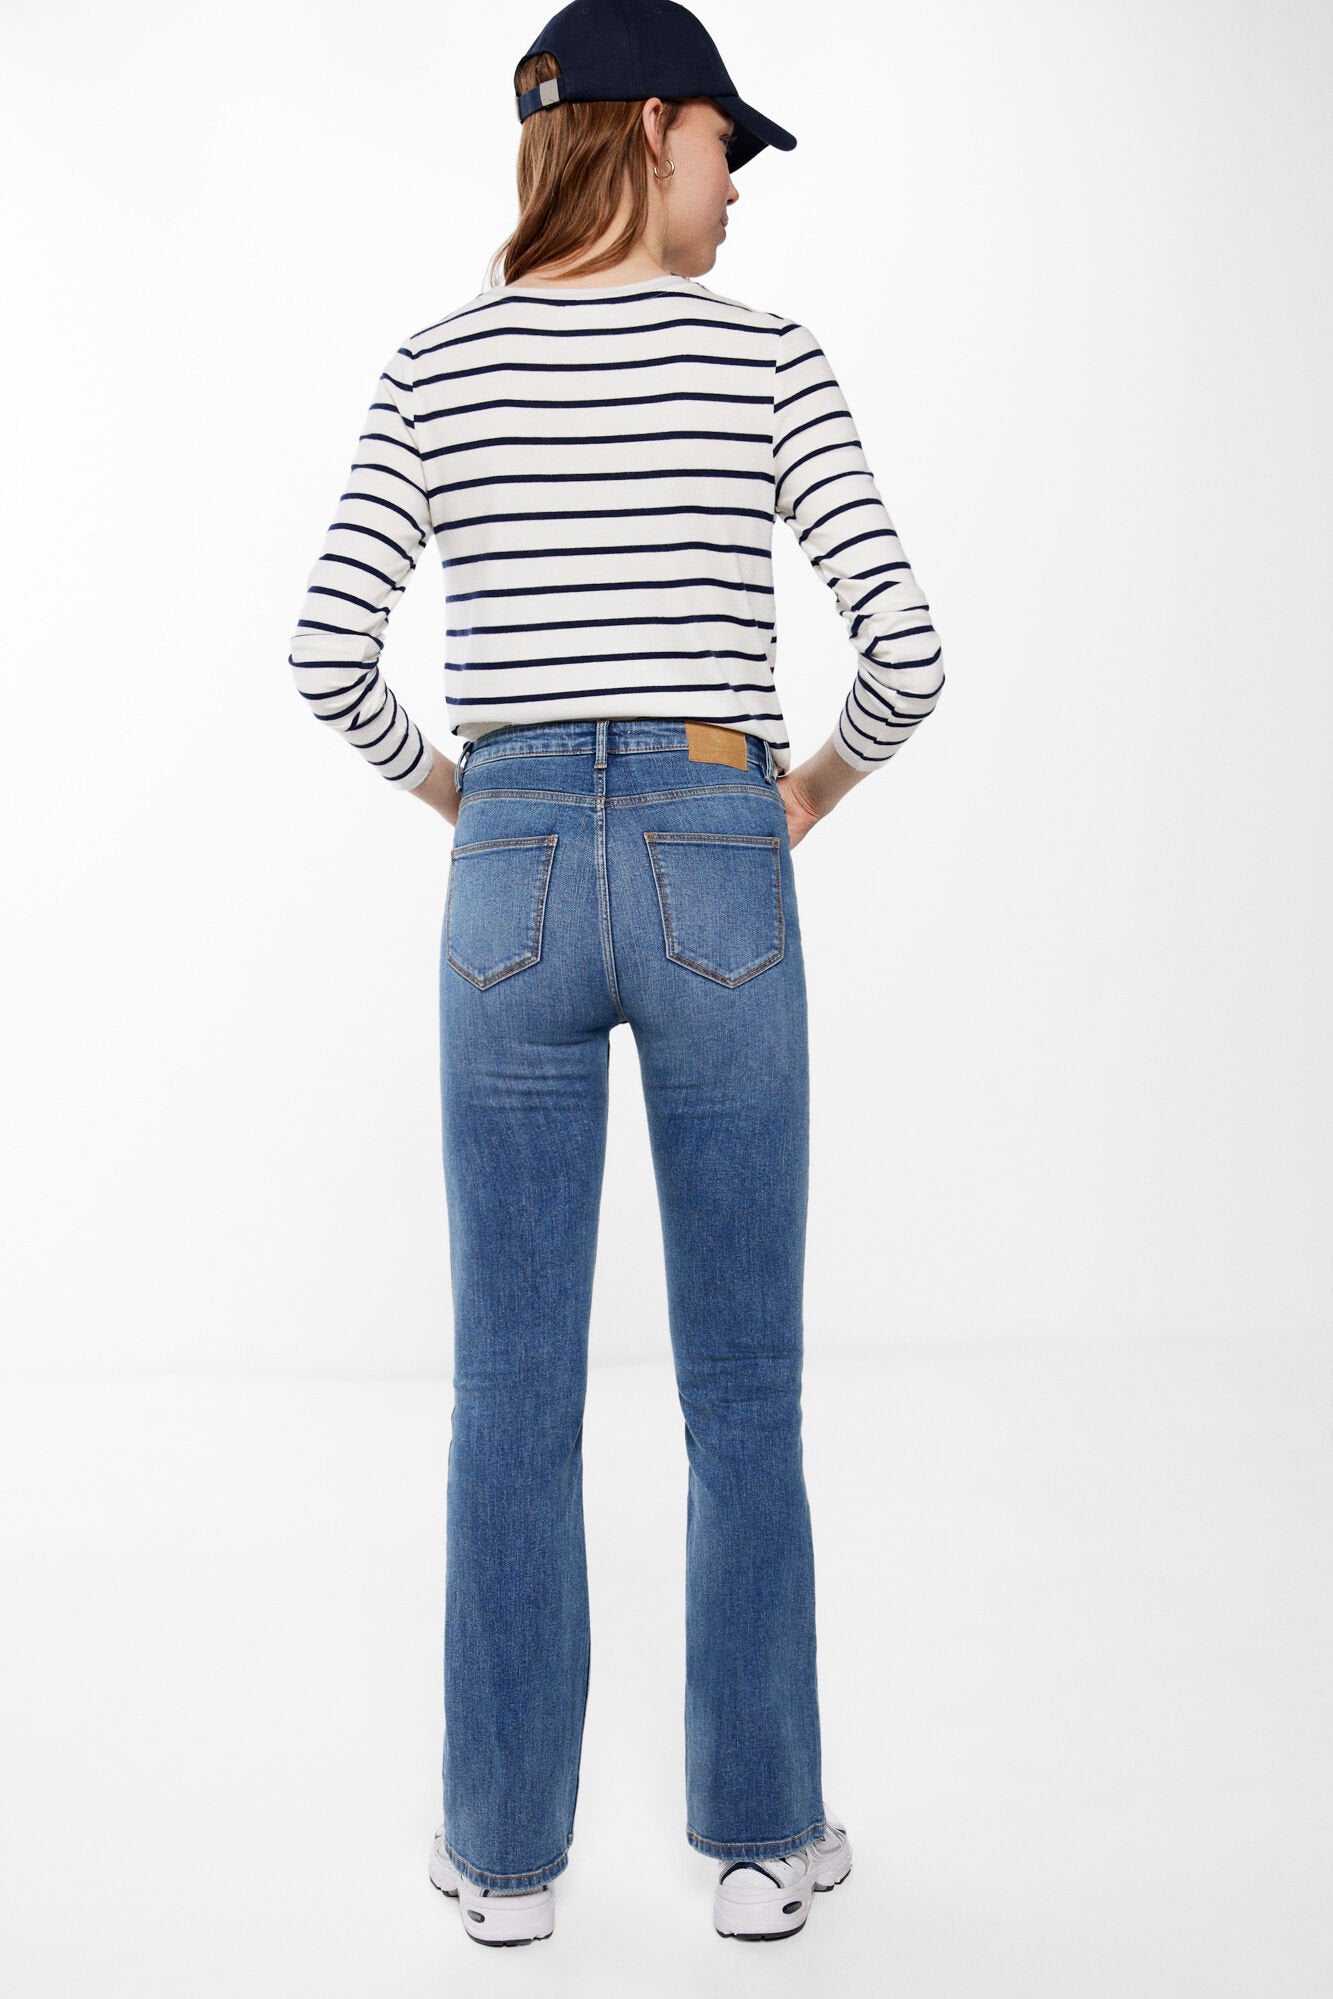 Low Waist Slim Fit Jeans_6827052_14_05